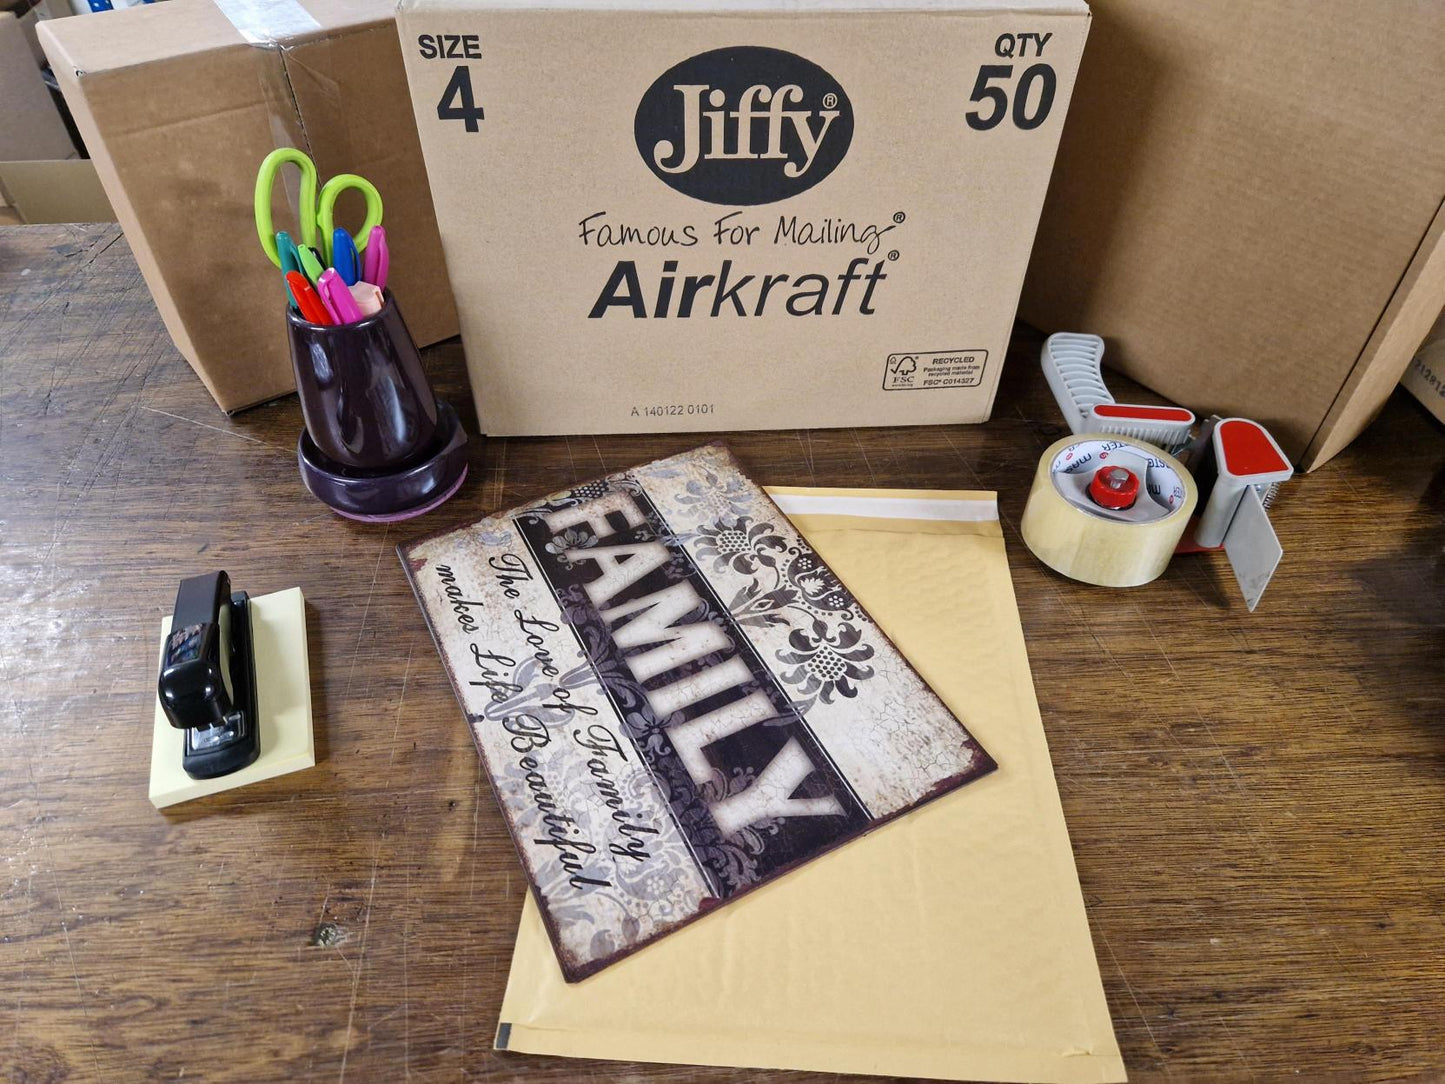 Box of Jiffy Airkraft JL4 - 270mm x 335mm (50 envelopes)